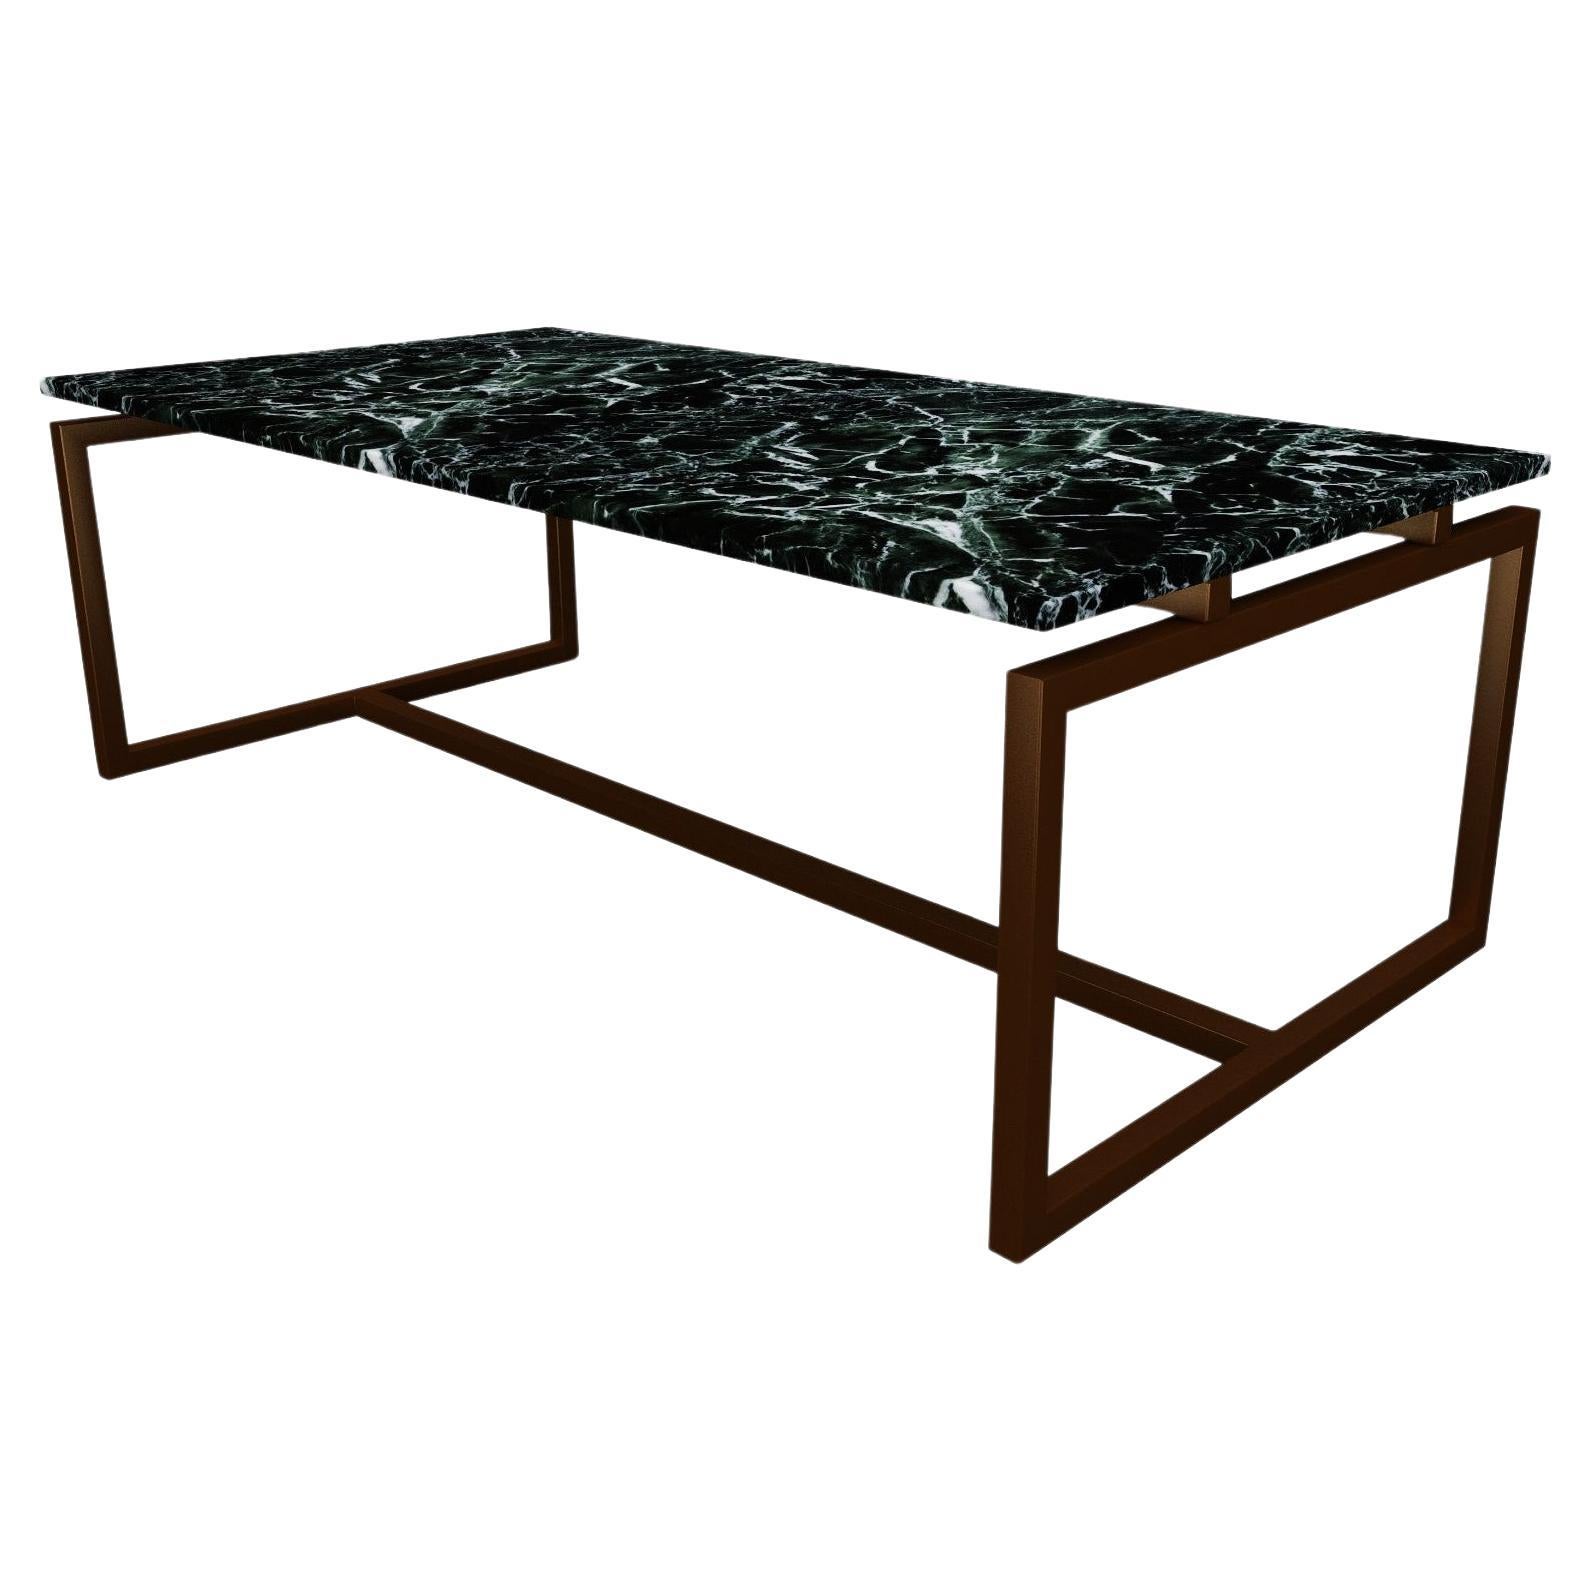 NORDST OLIVIA Coffee Table, Italian Green Lightning Marble, Danish Modern Design